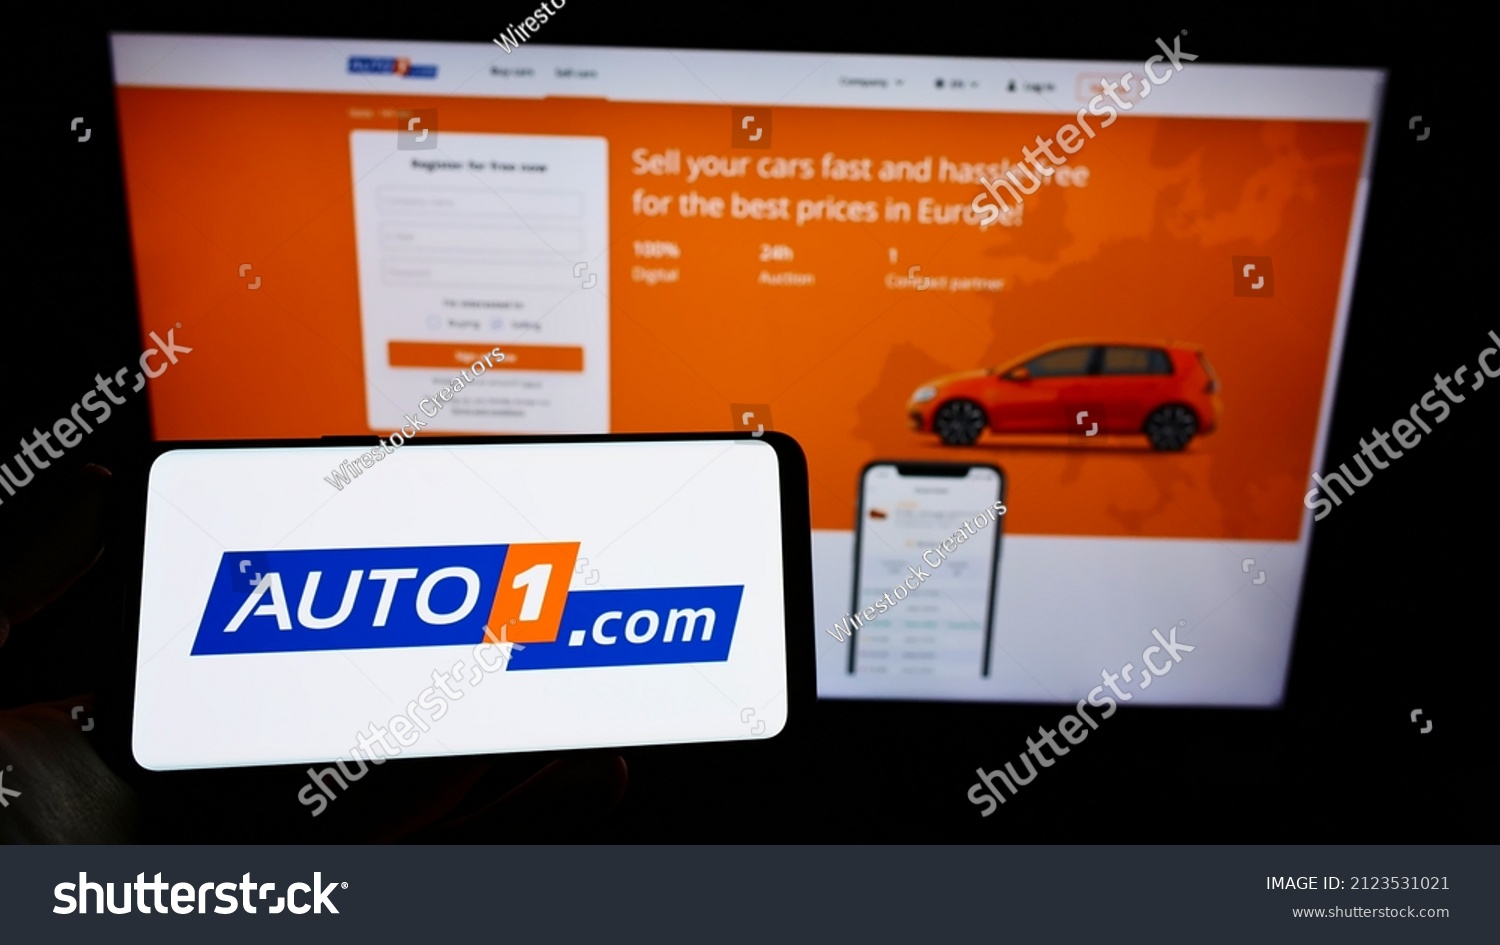 22 Auto1 group Images, Stock Photos & Vectors | Shutterstock